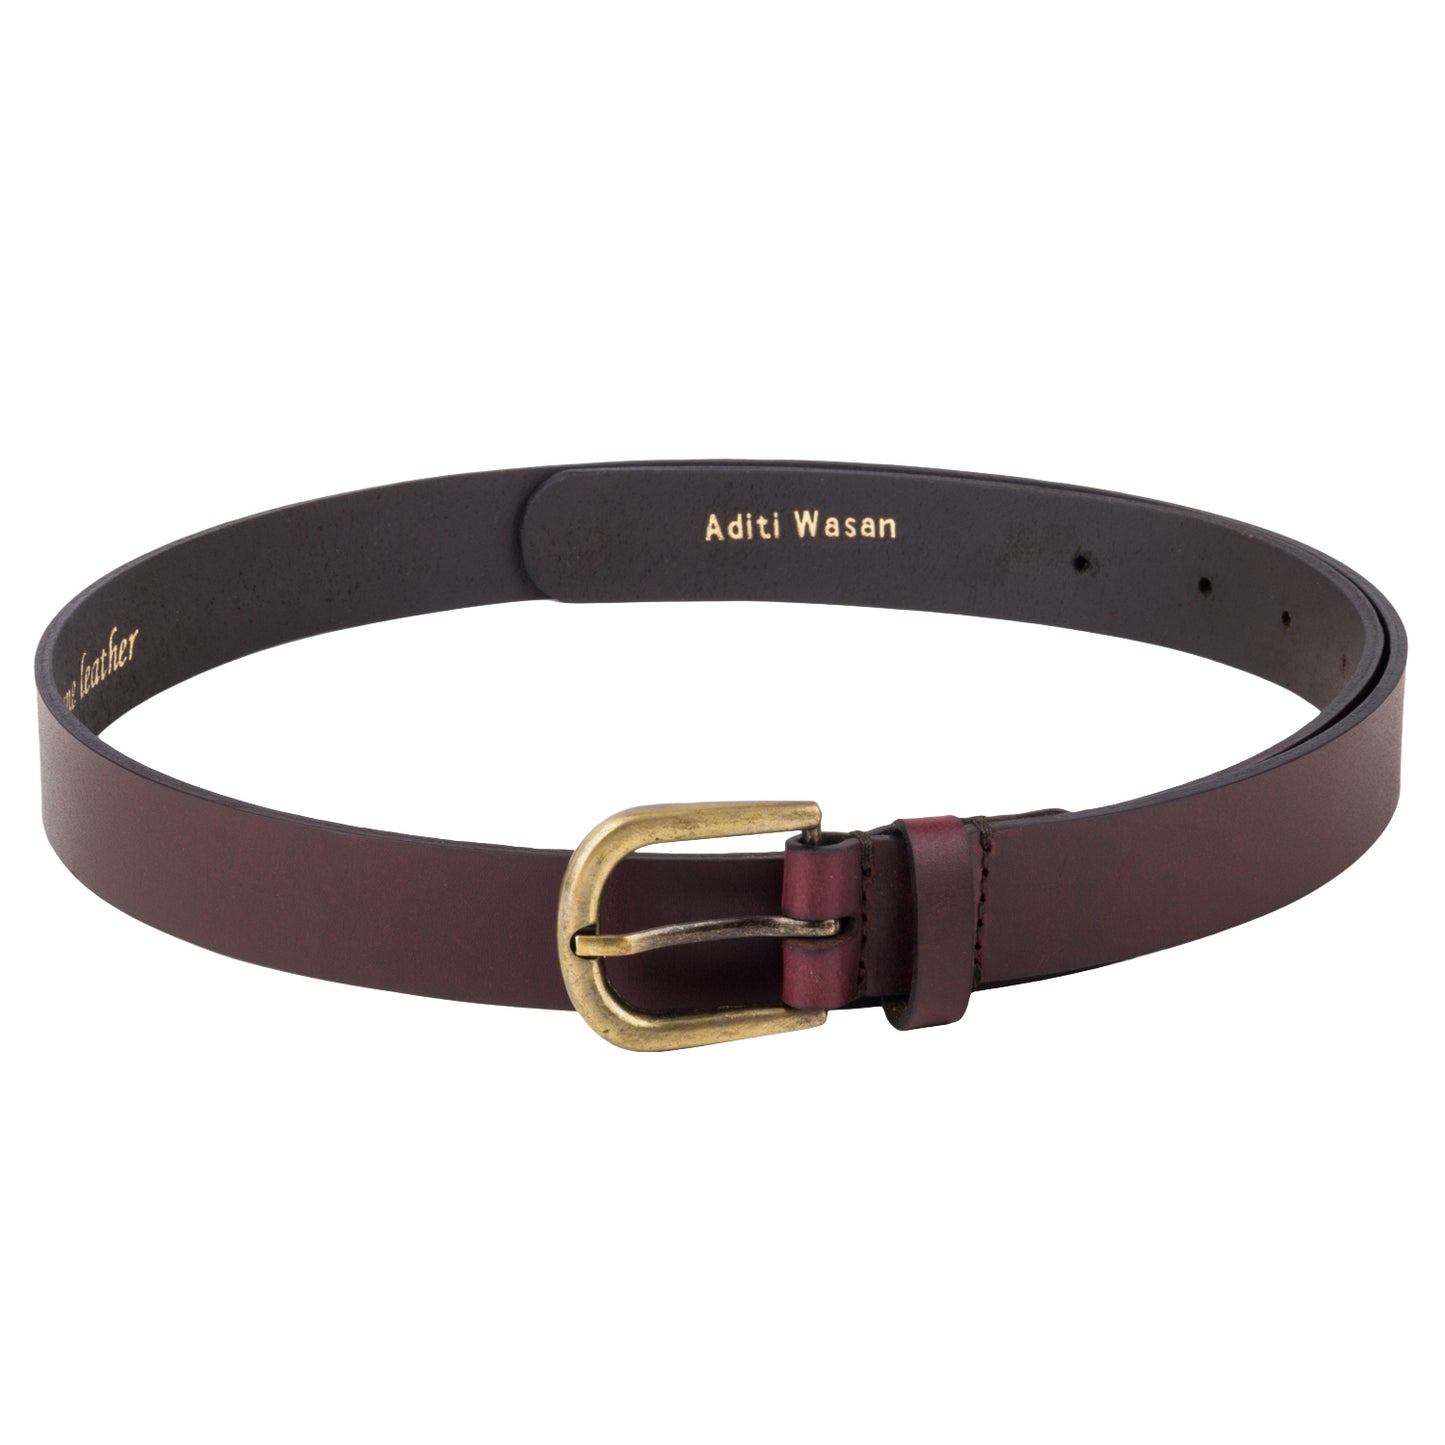 Genuine leather bordo belt